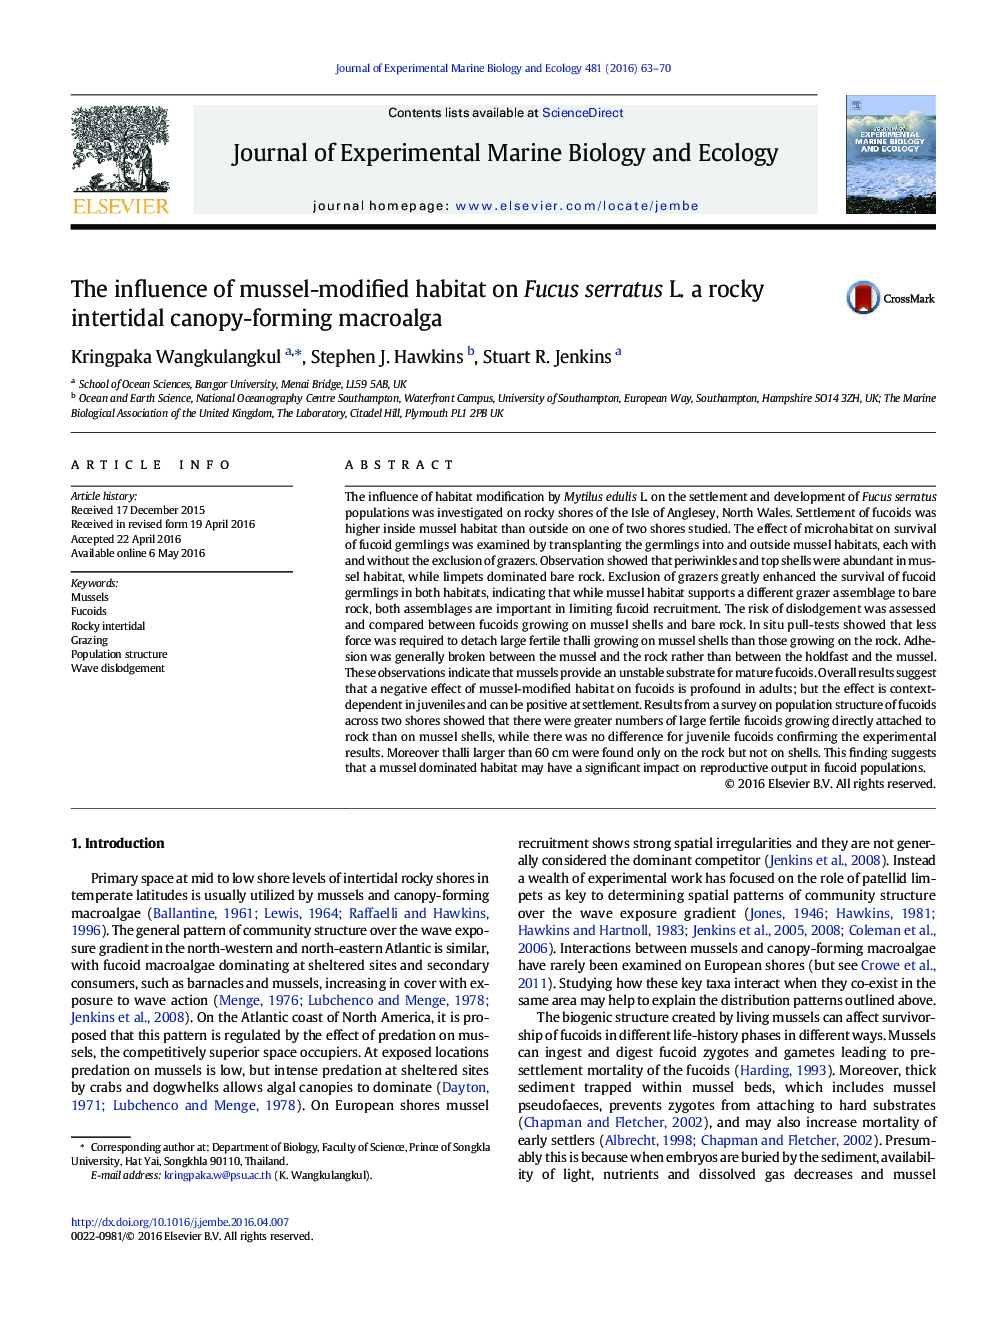 The influence of mussel-modified habitat on Fucus serratus L. a rocky intertidal canopy-forming macroalga